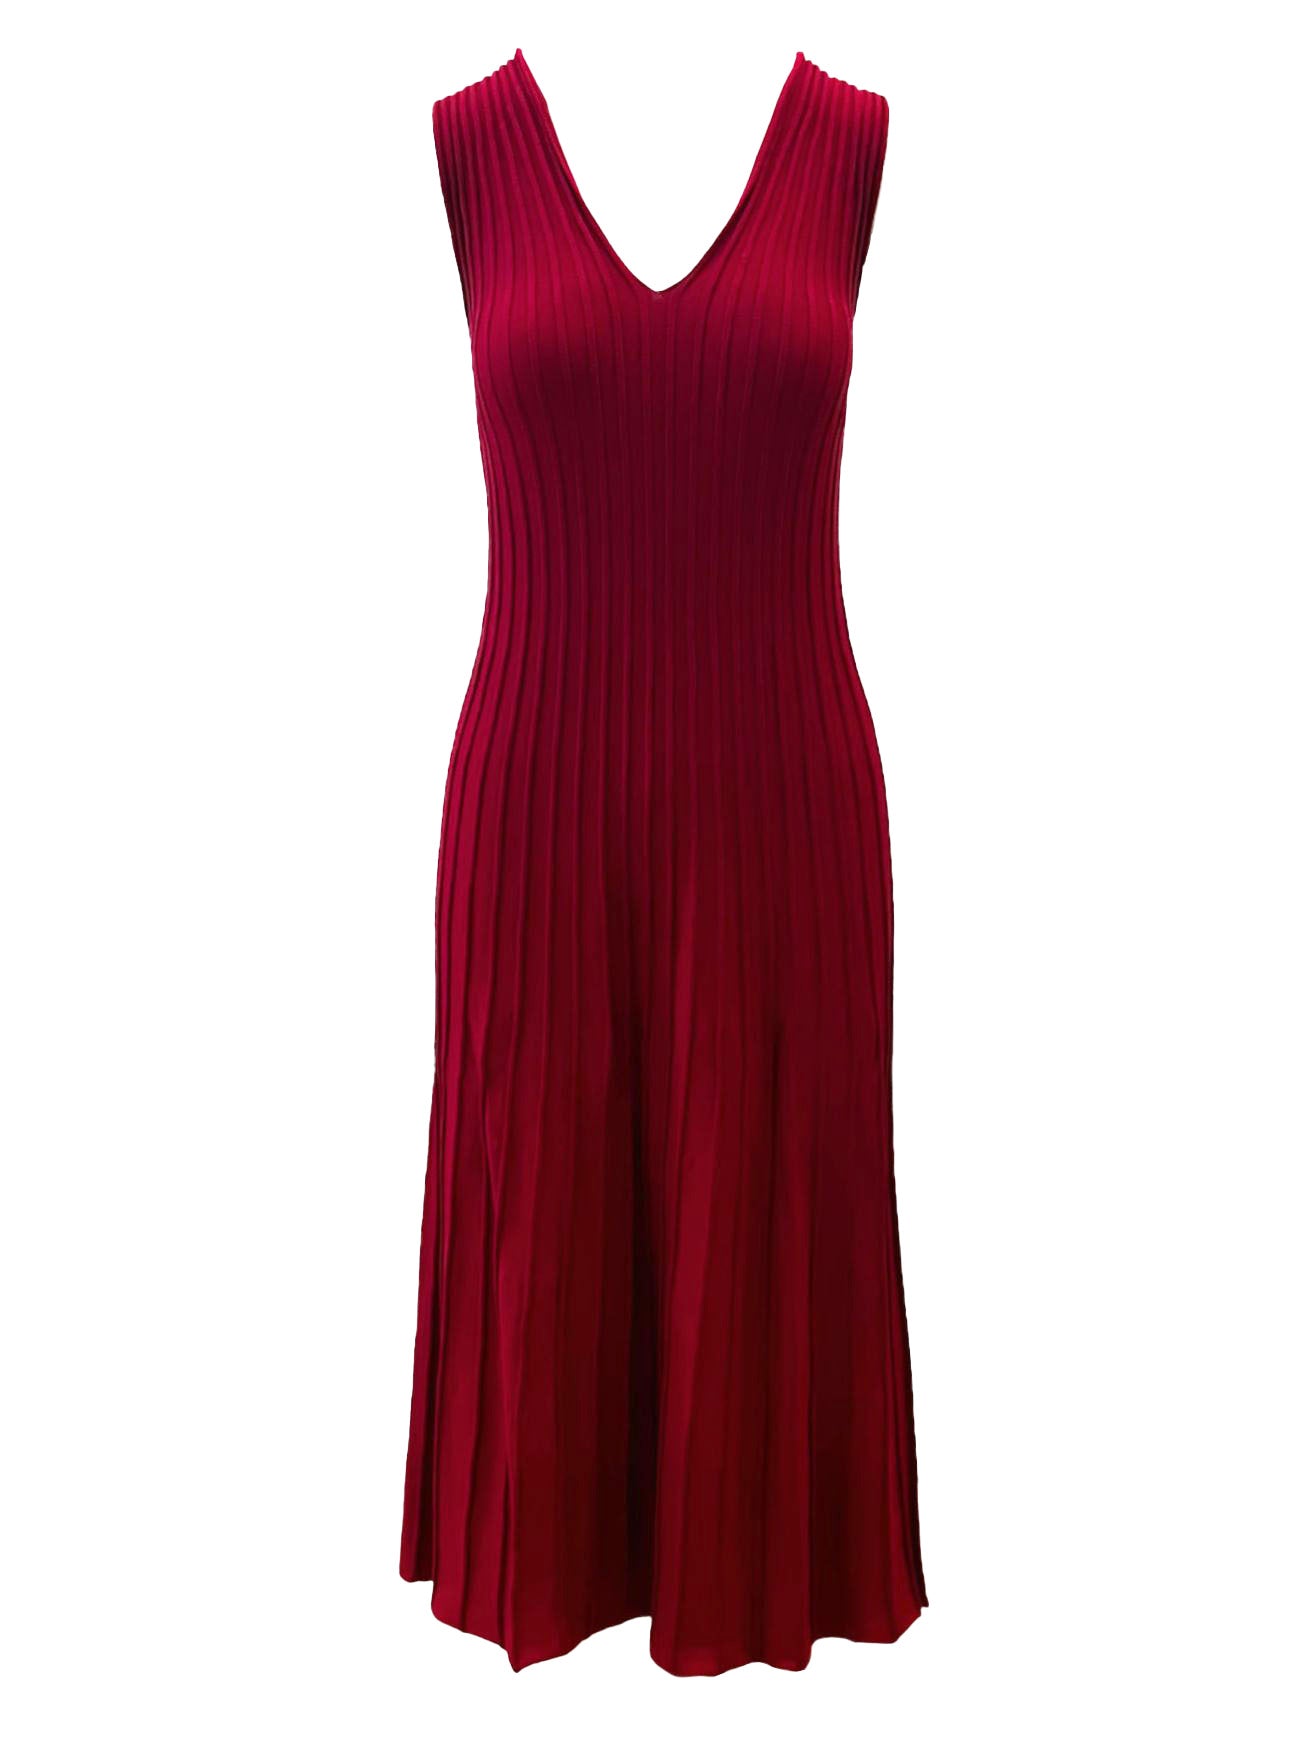 kendall crimson variegated dress